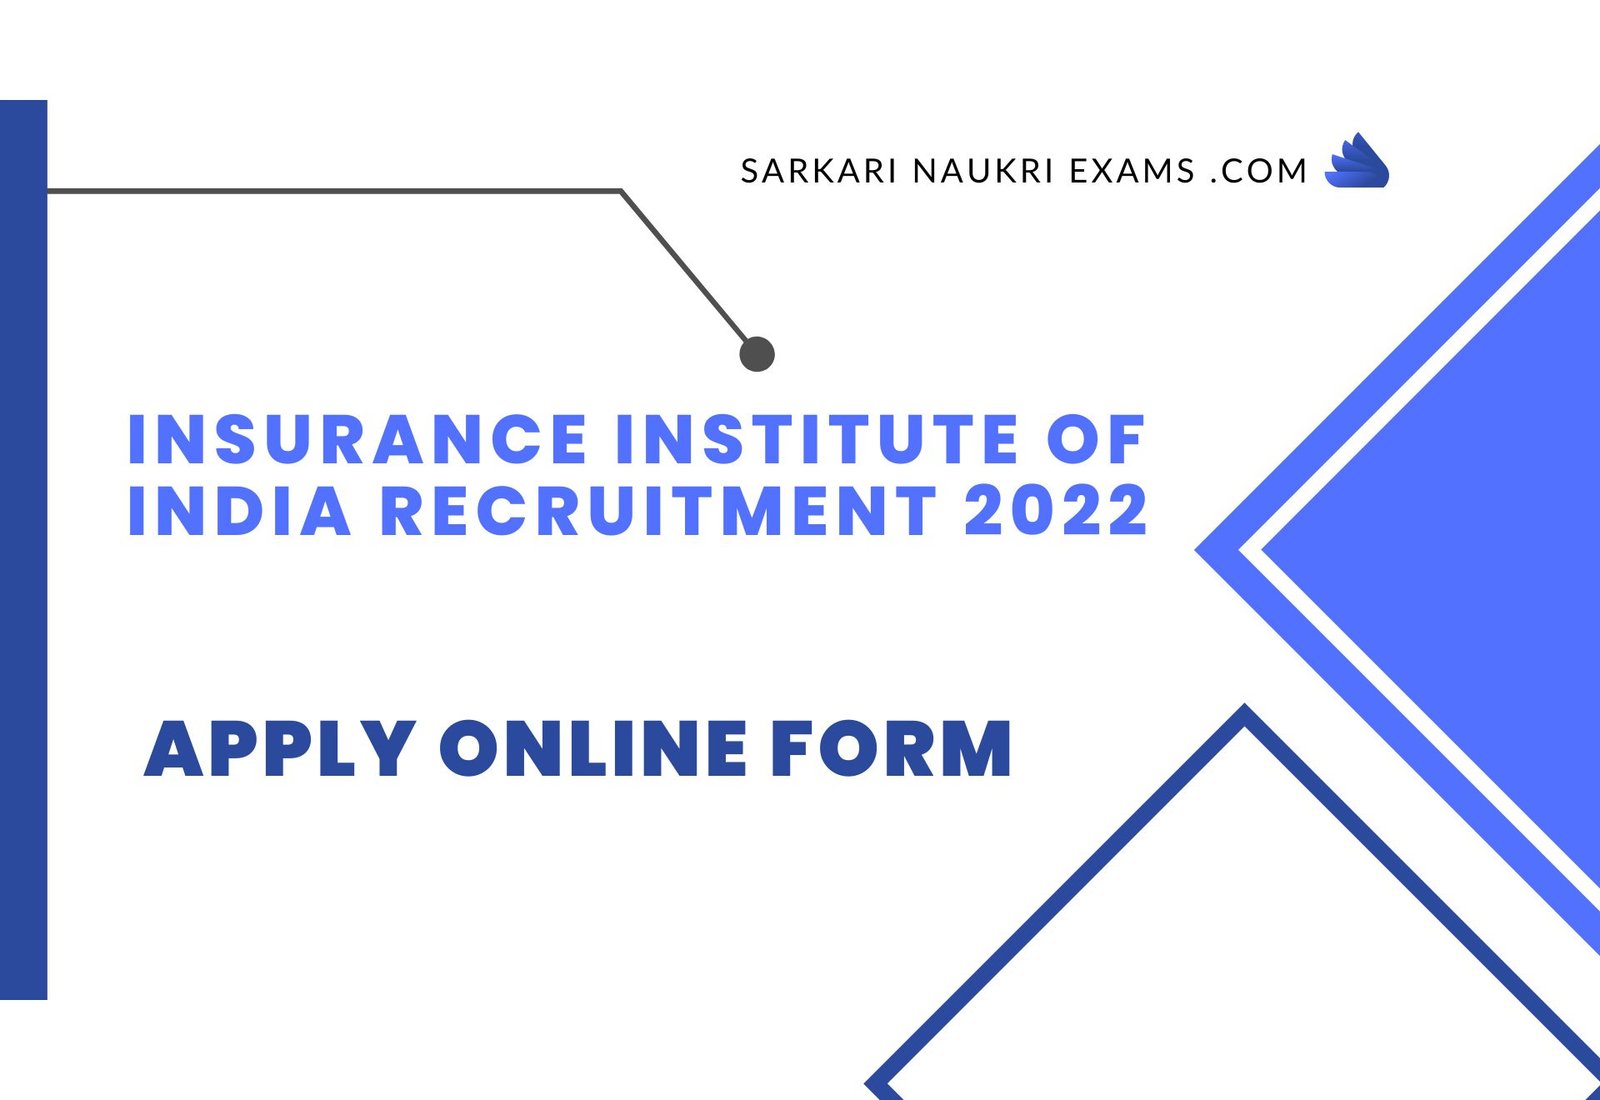 Insurance Institute of India recruitment 2022 | Online Form